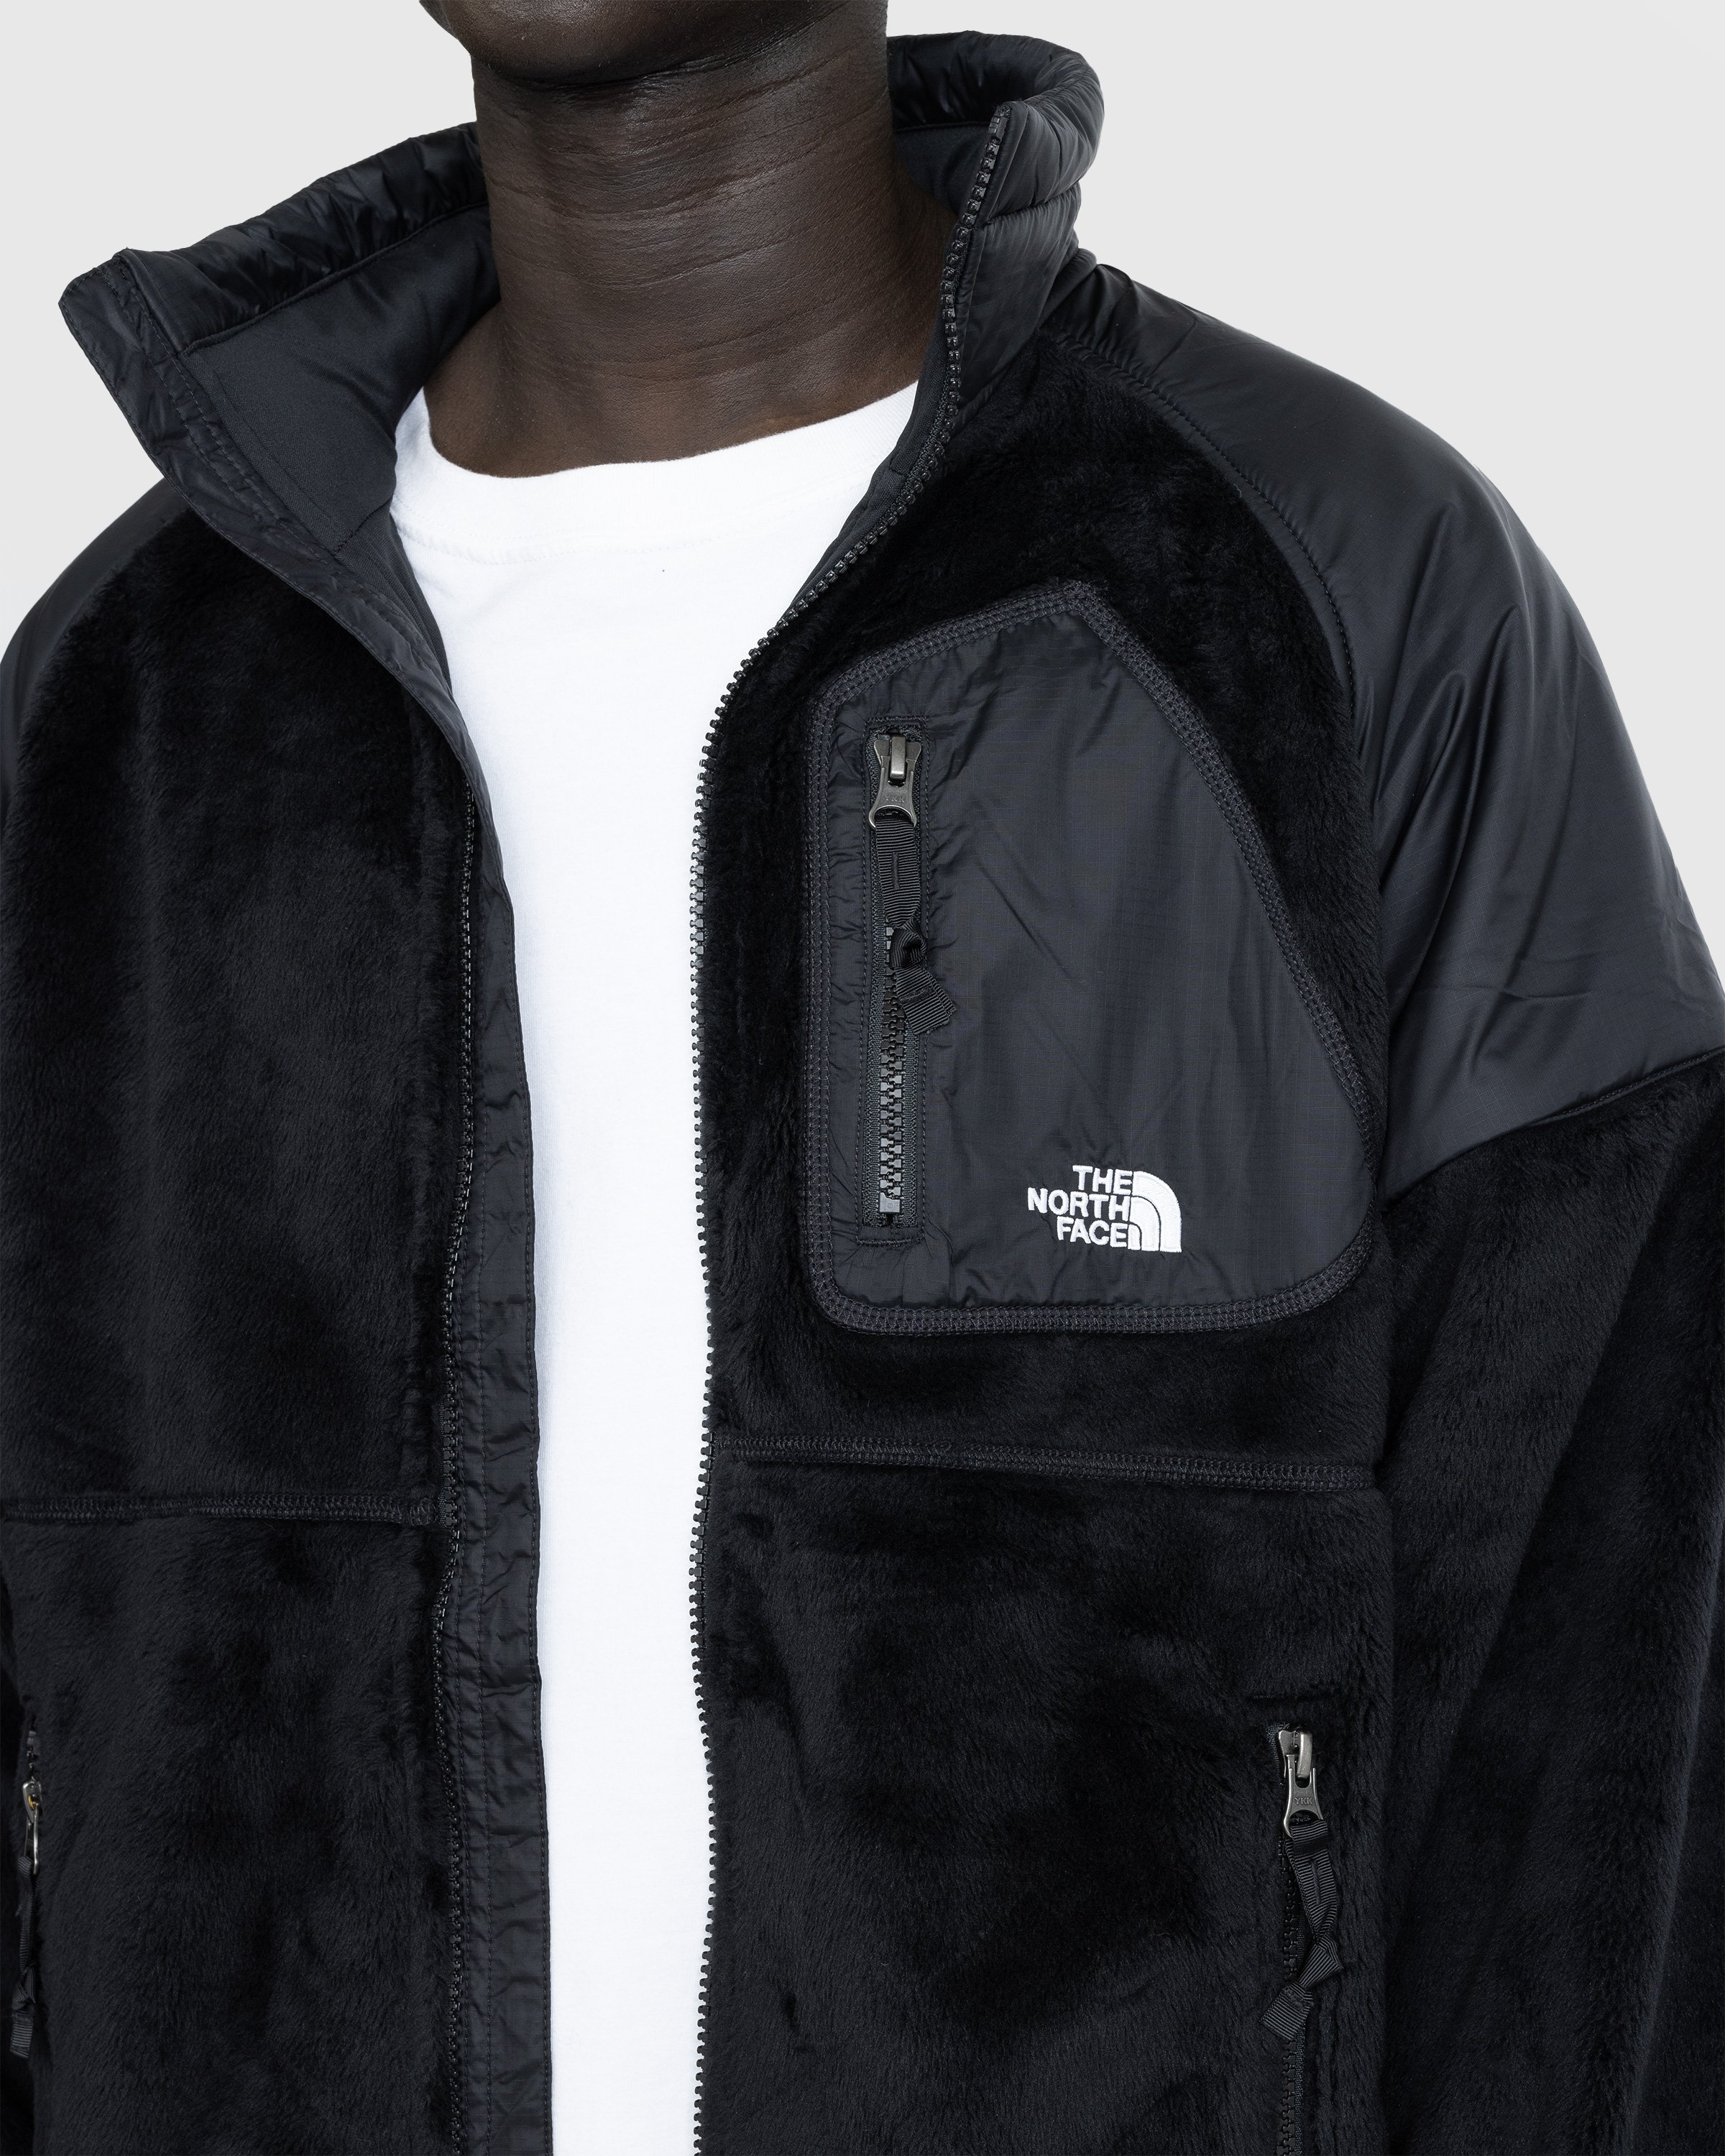 The North Face - Versa Velour Jacket Black - Clothing - Black - Image 5